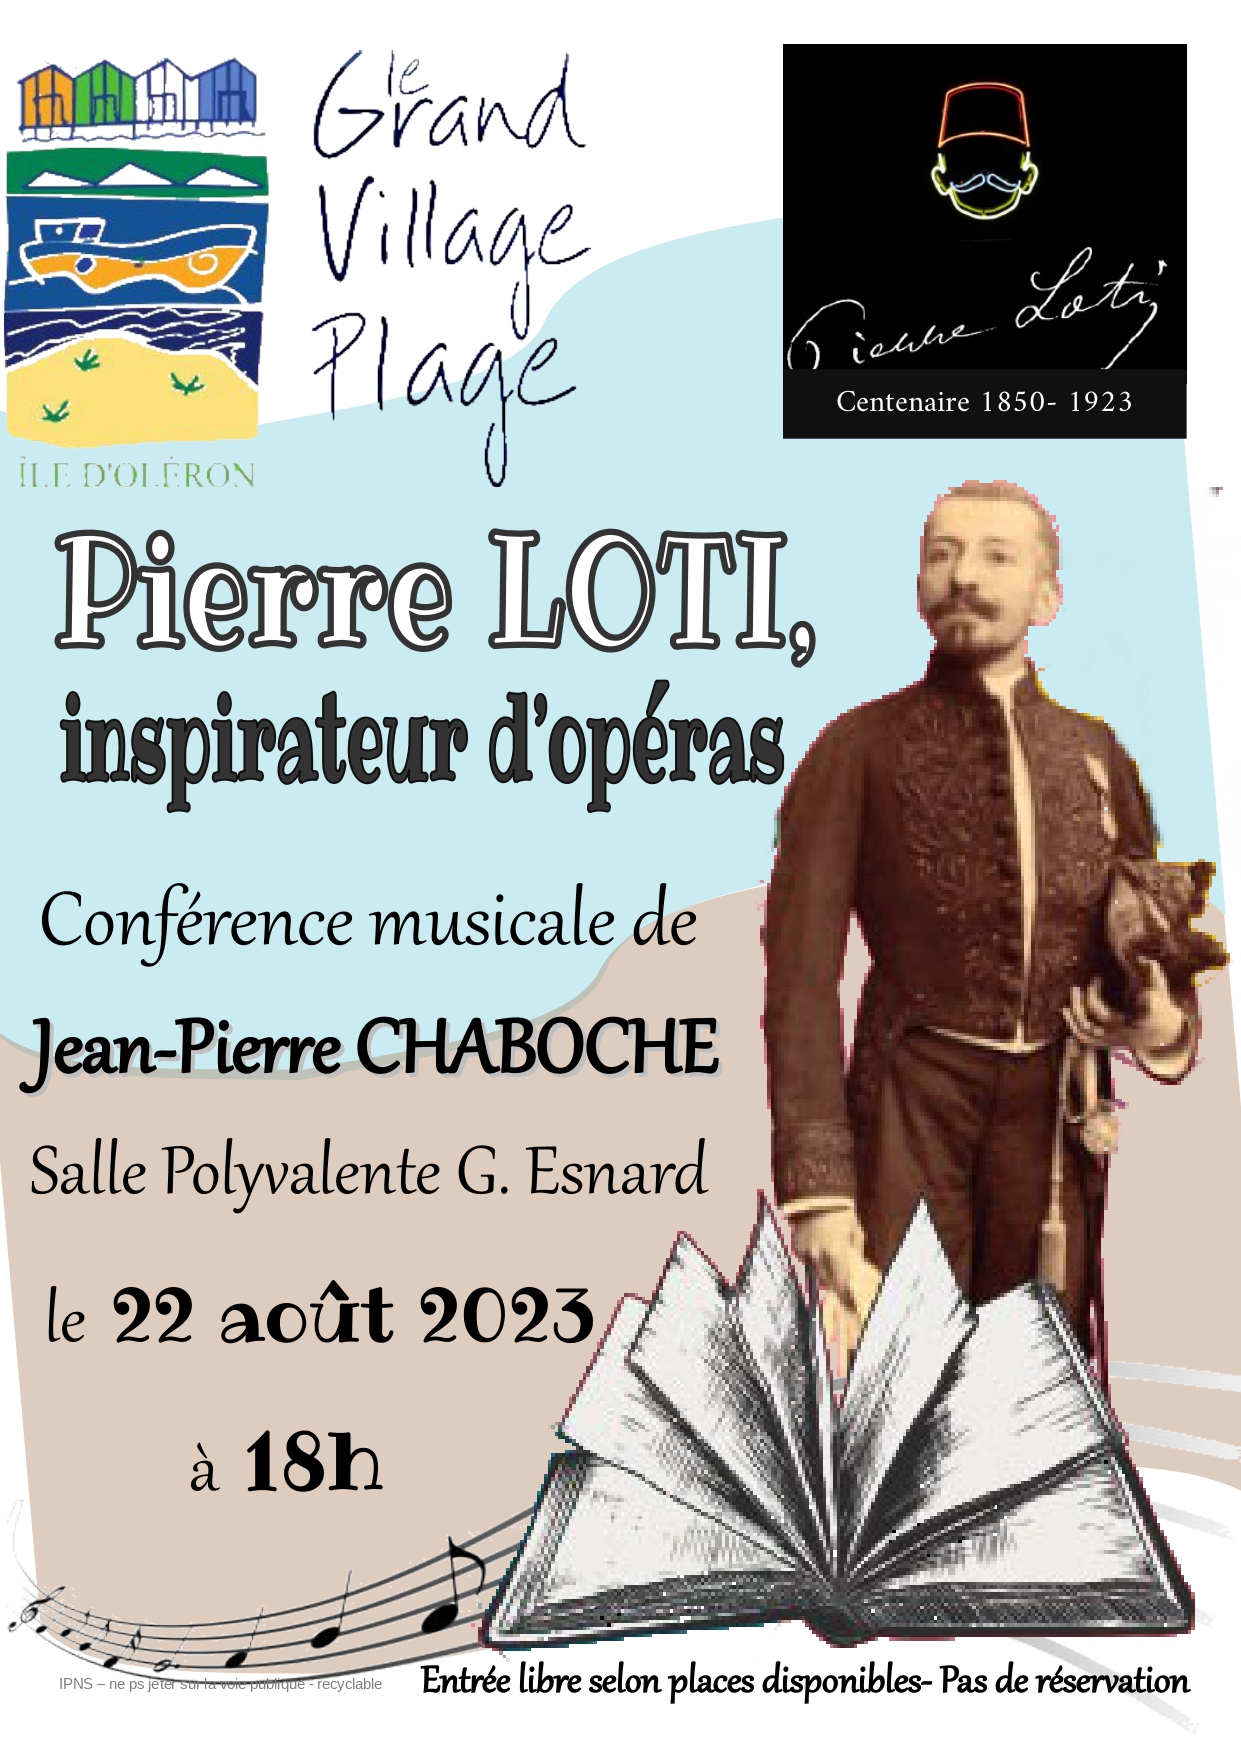 Affiche : Conférence musicale Pierre Loti